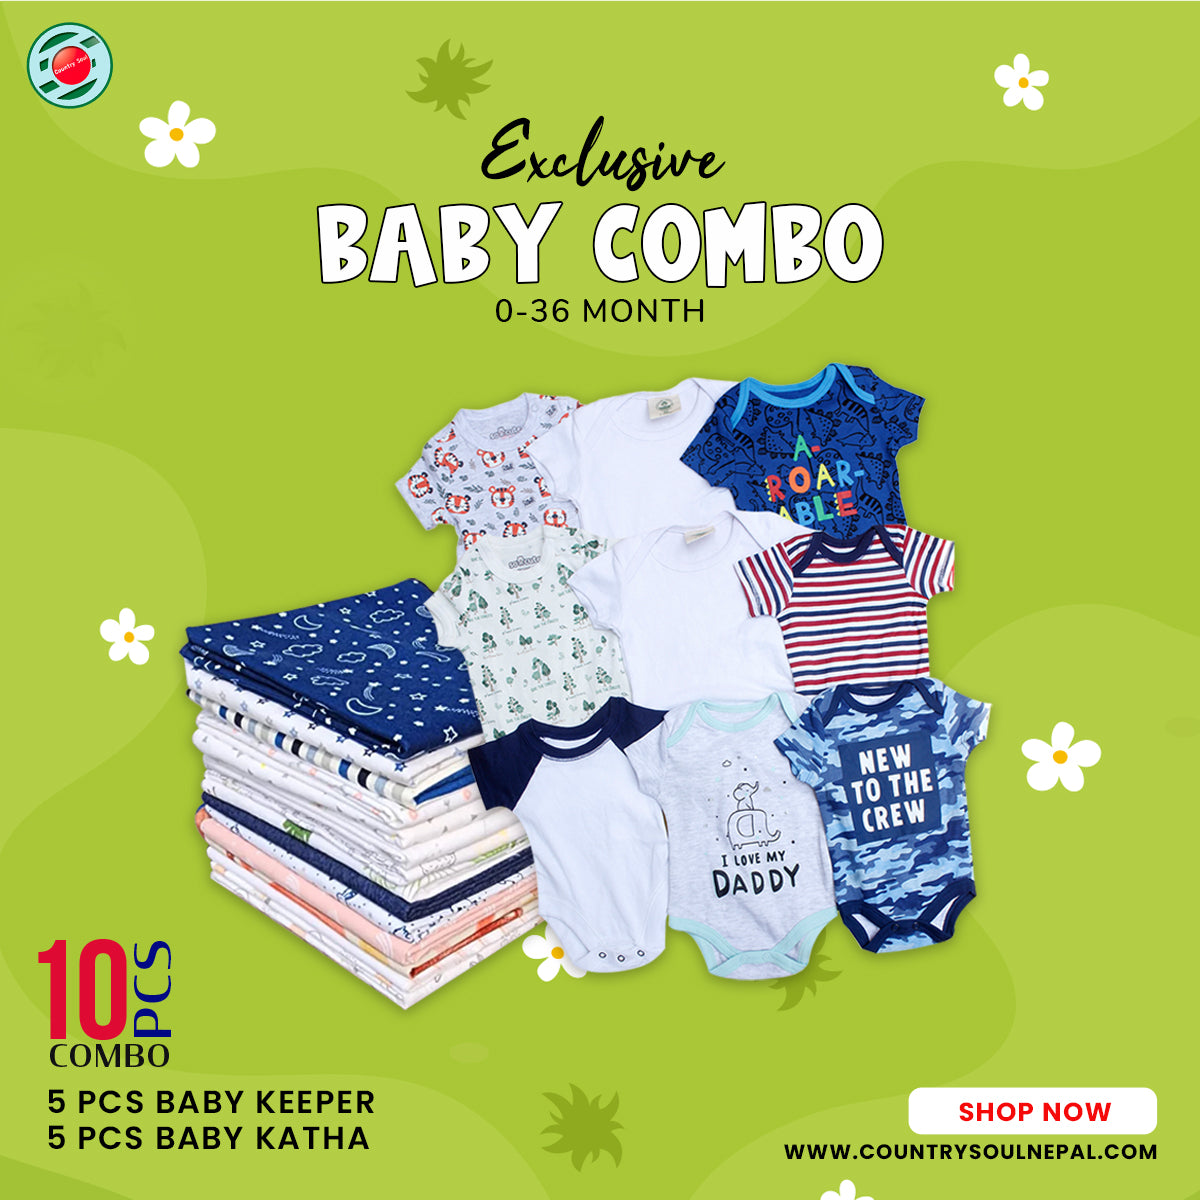 5 Pcs Baby Keeper & 5 Pcs Baby Katha Combo Offer